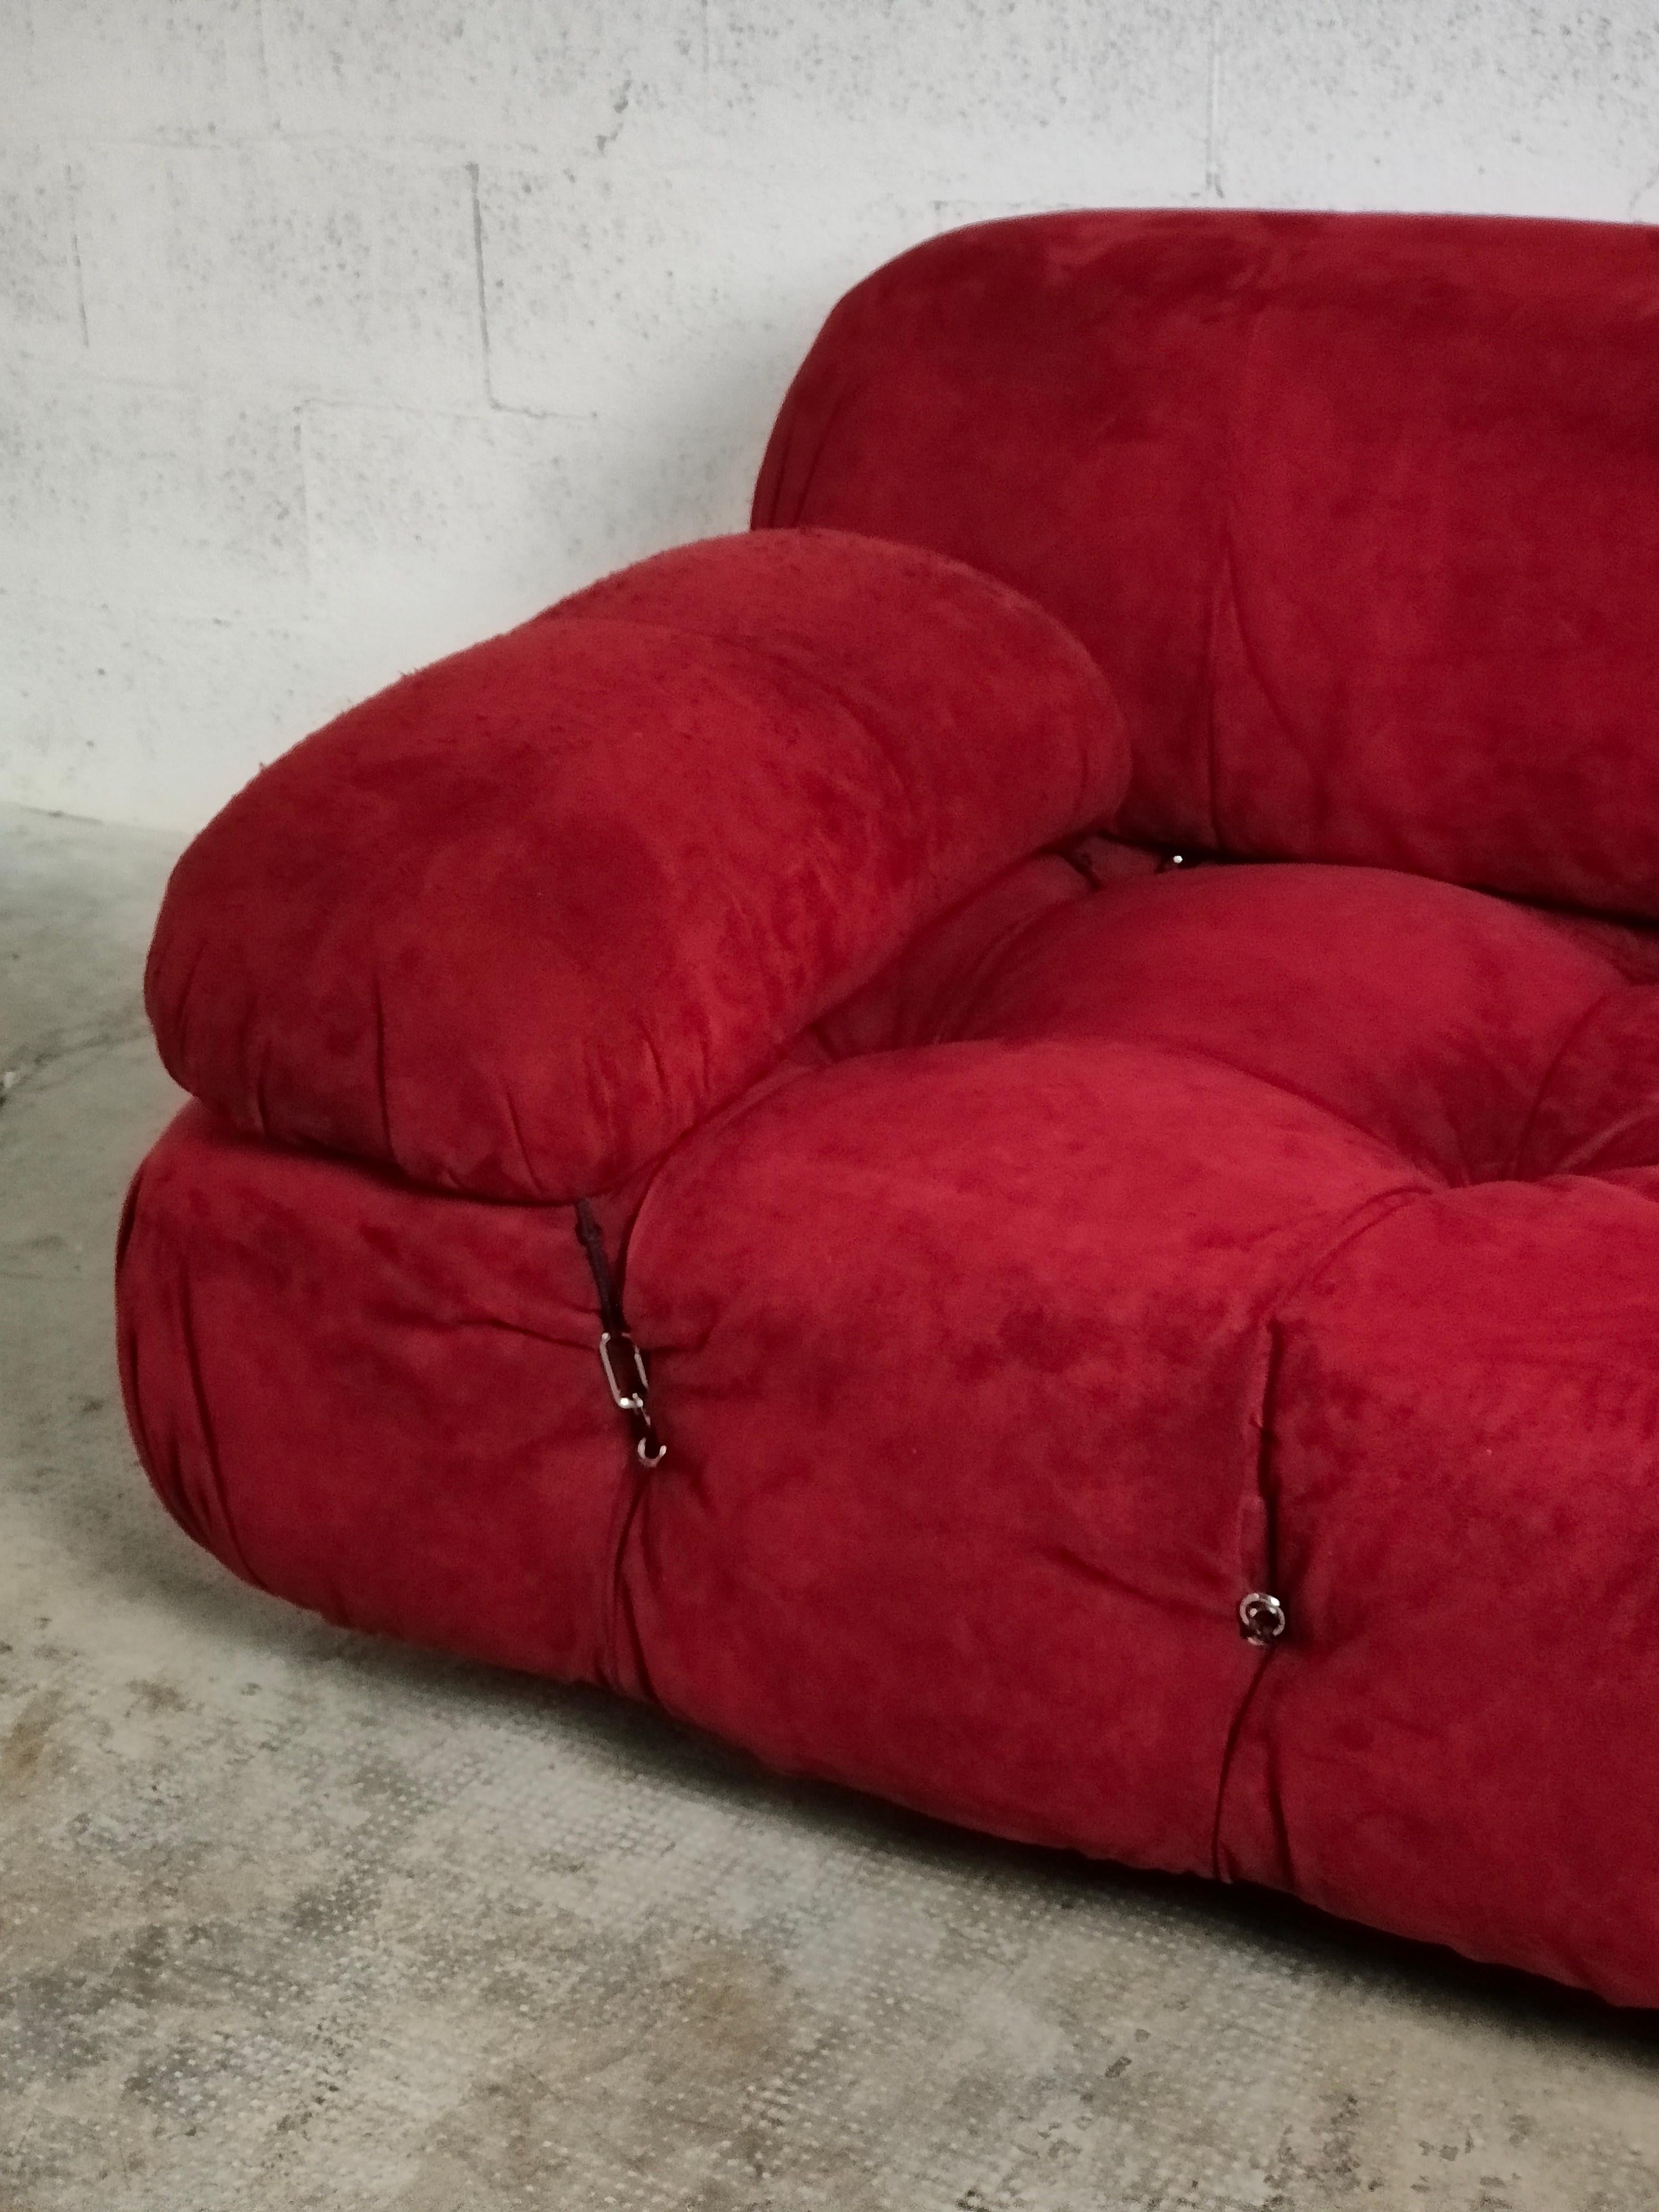 Fabric Camaleonda Red Sofa by Mario Bellini for B&B Italia, 1970s For Sale